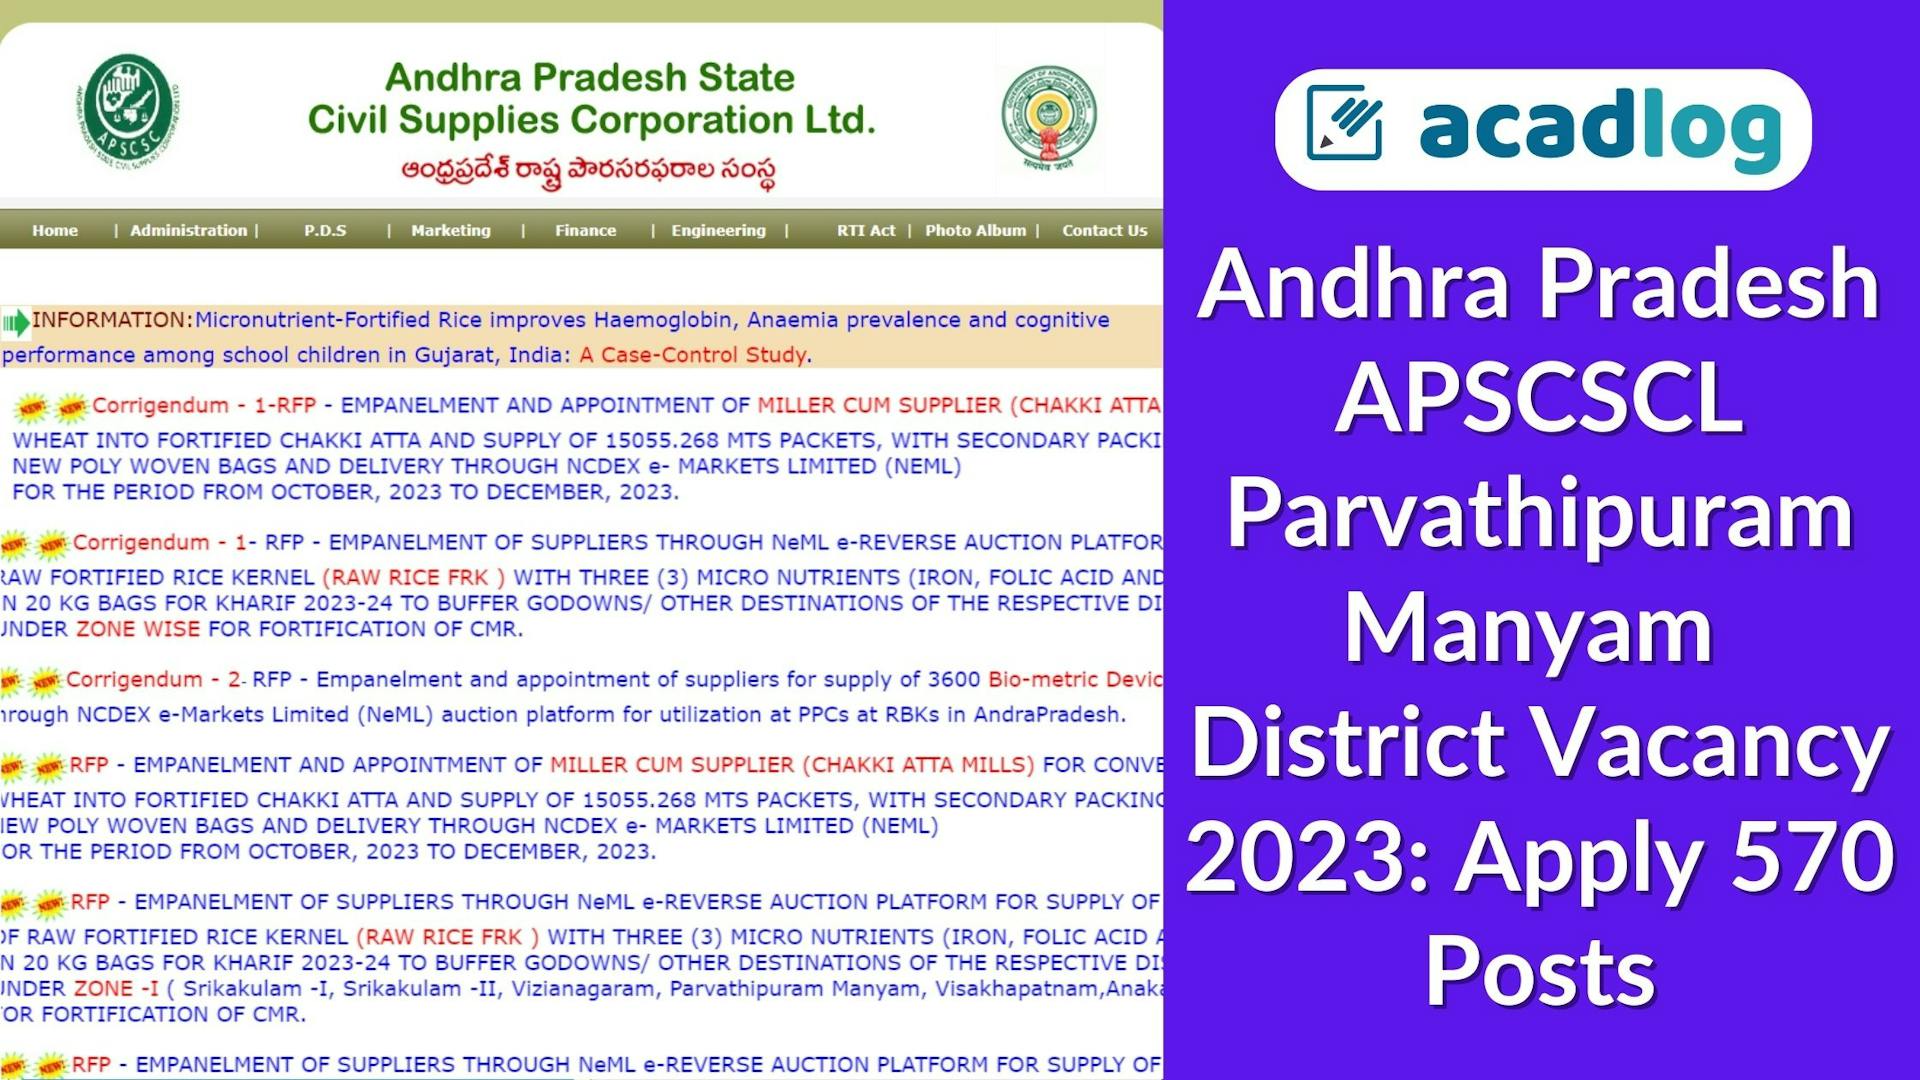 Andhra Pradesh APSCSCL Parvathipuram Manyam District Vacancy 2023: Apply 570 Posts